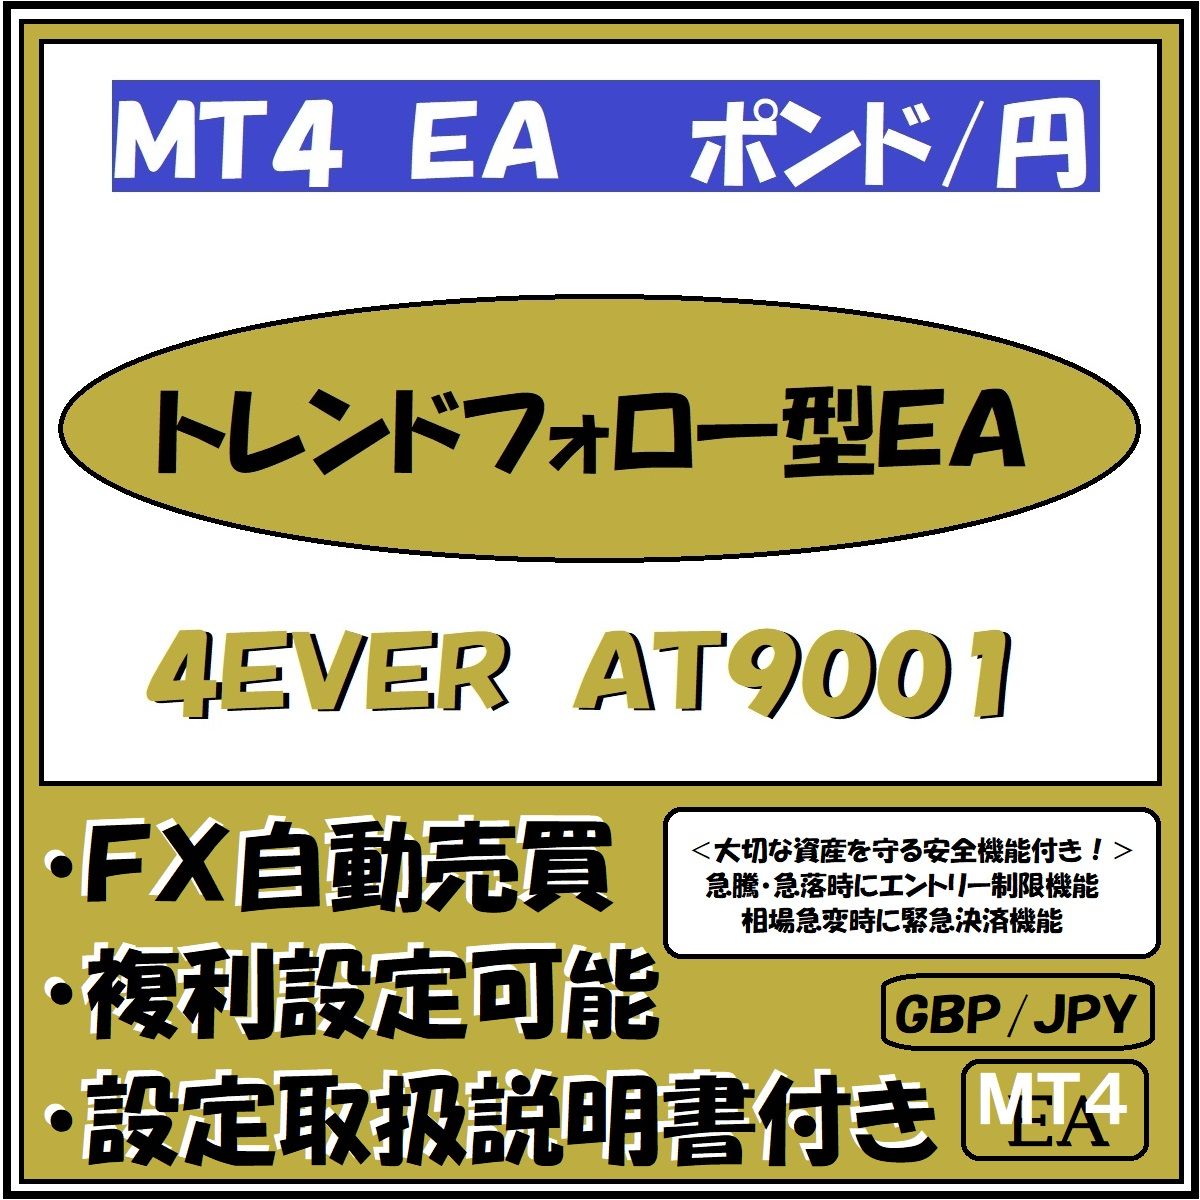 GBP-JPY　4EVER　AT9001（ポンド円　トレンドフォロー型安全運用機能付きＥＡ） Tự động giao dịch